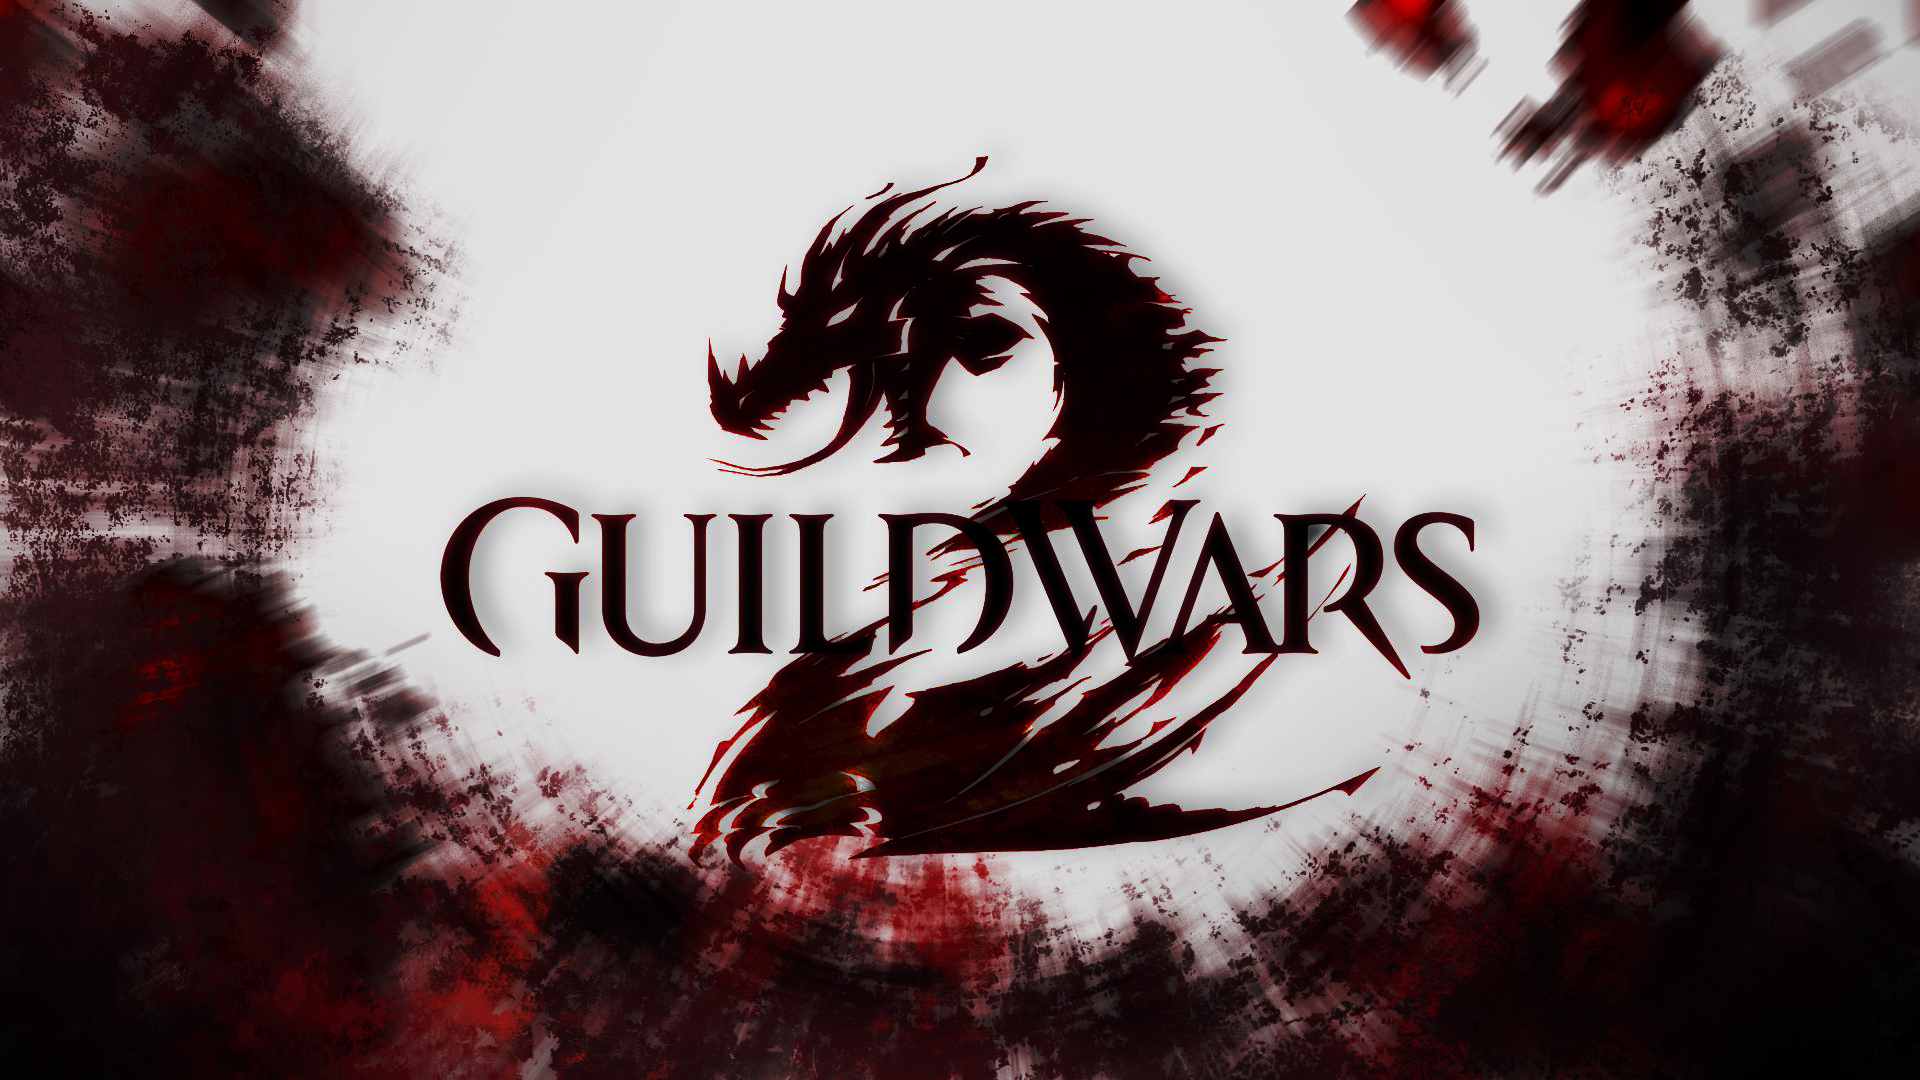 Guild Wars Wallpaper Gallery Image